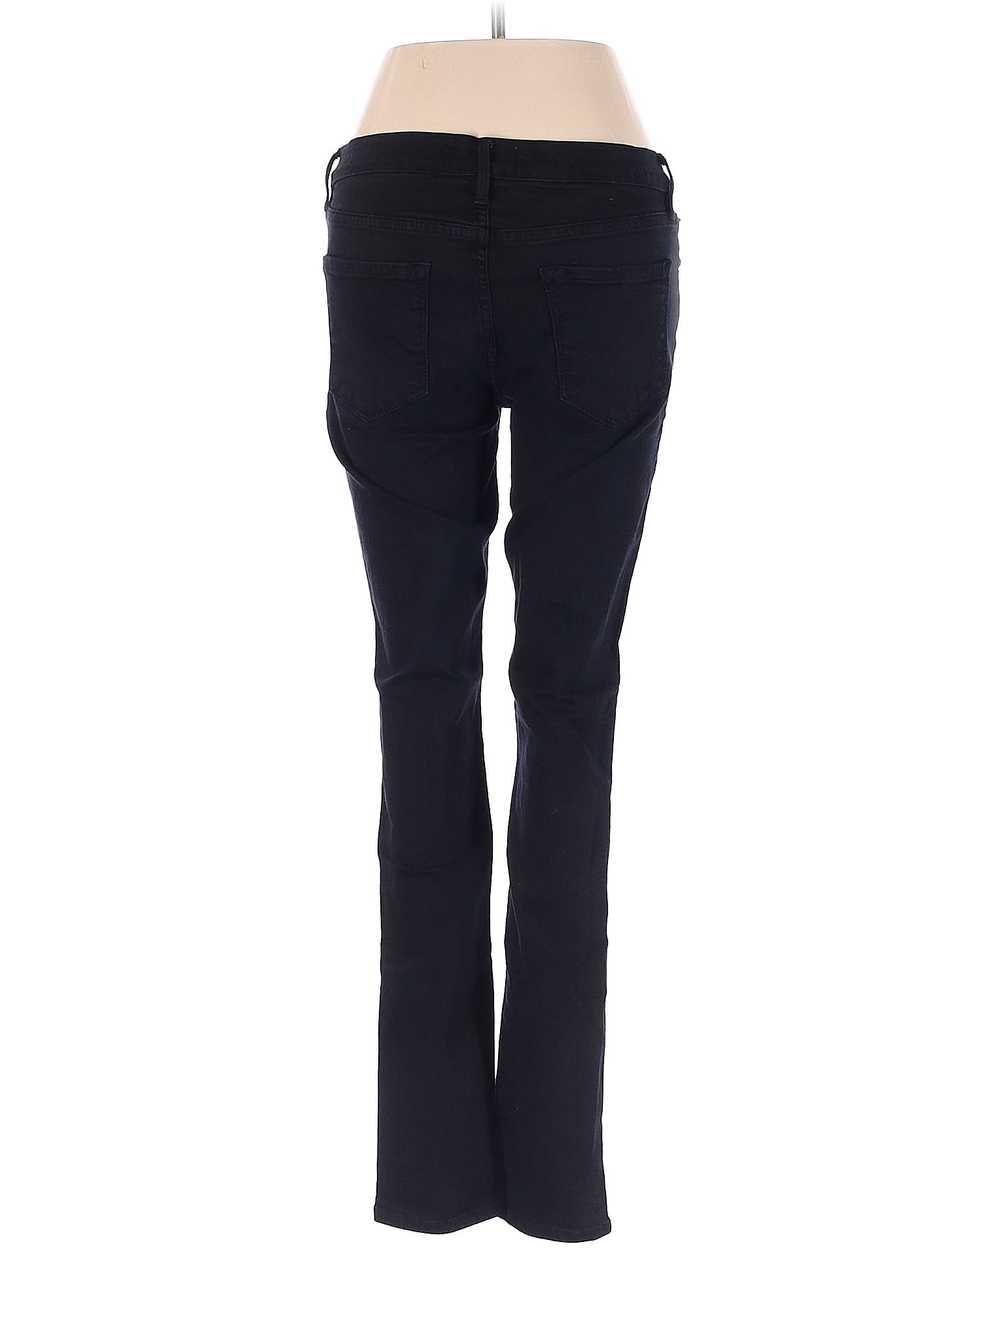 FRAME Denim Women Black Jeans 29W - image 2